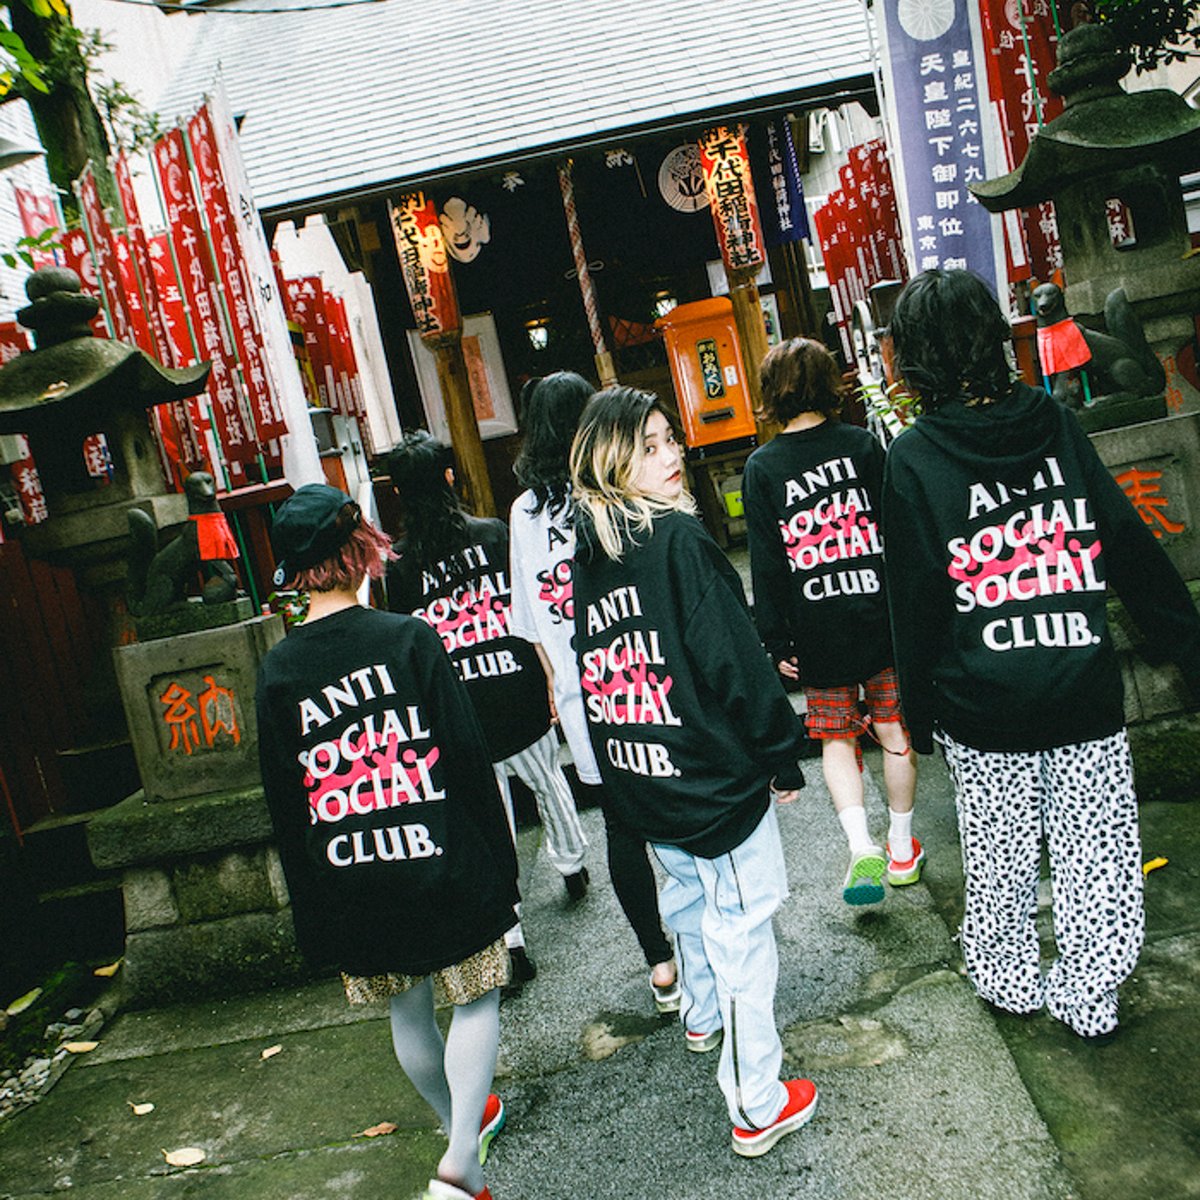 BiSH x anti social social club hoodie Ｌ